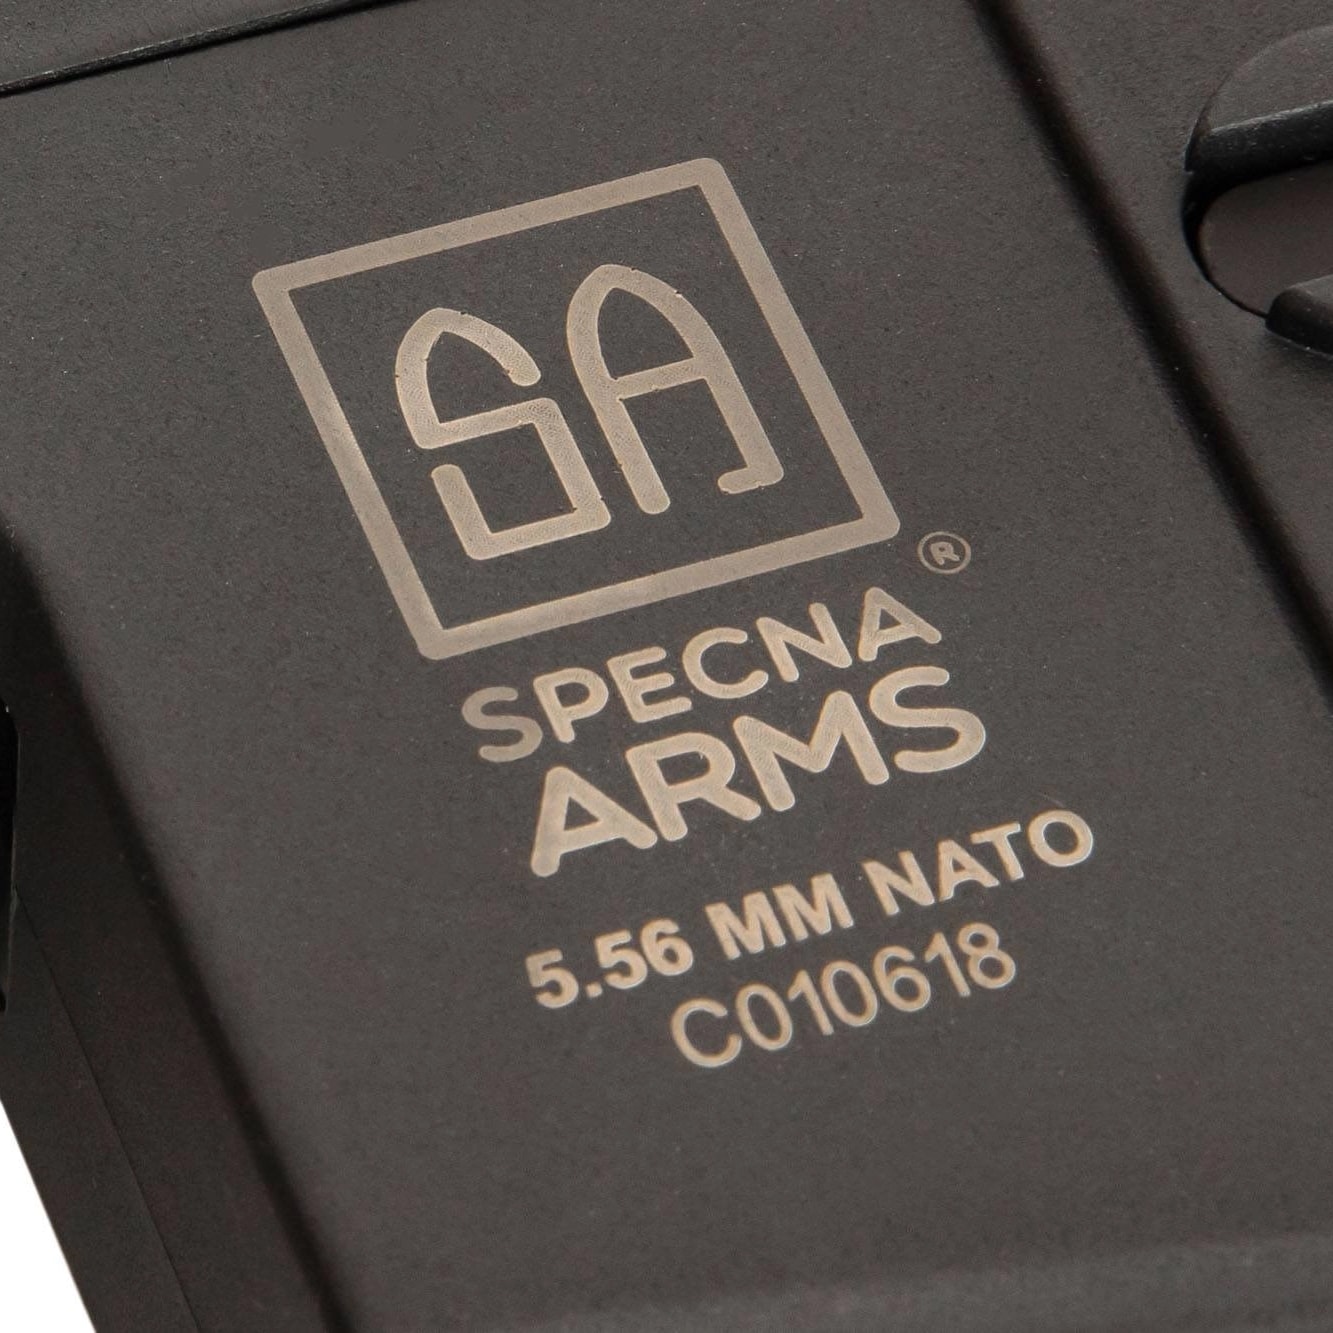 Karabinek szturmowy AEG Specna Arms SA-C24 CORE - Black